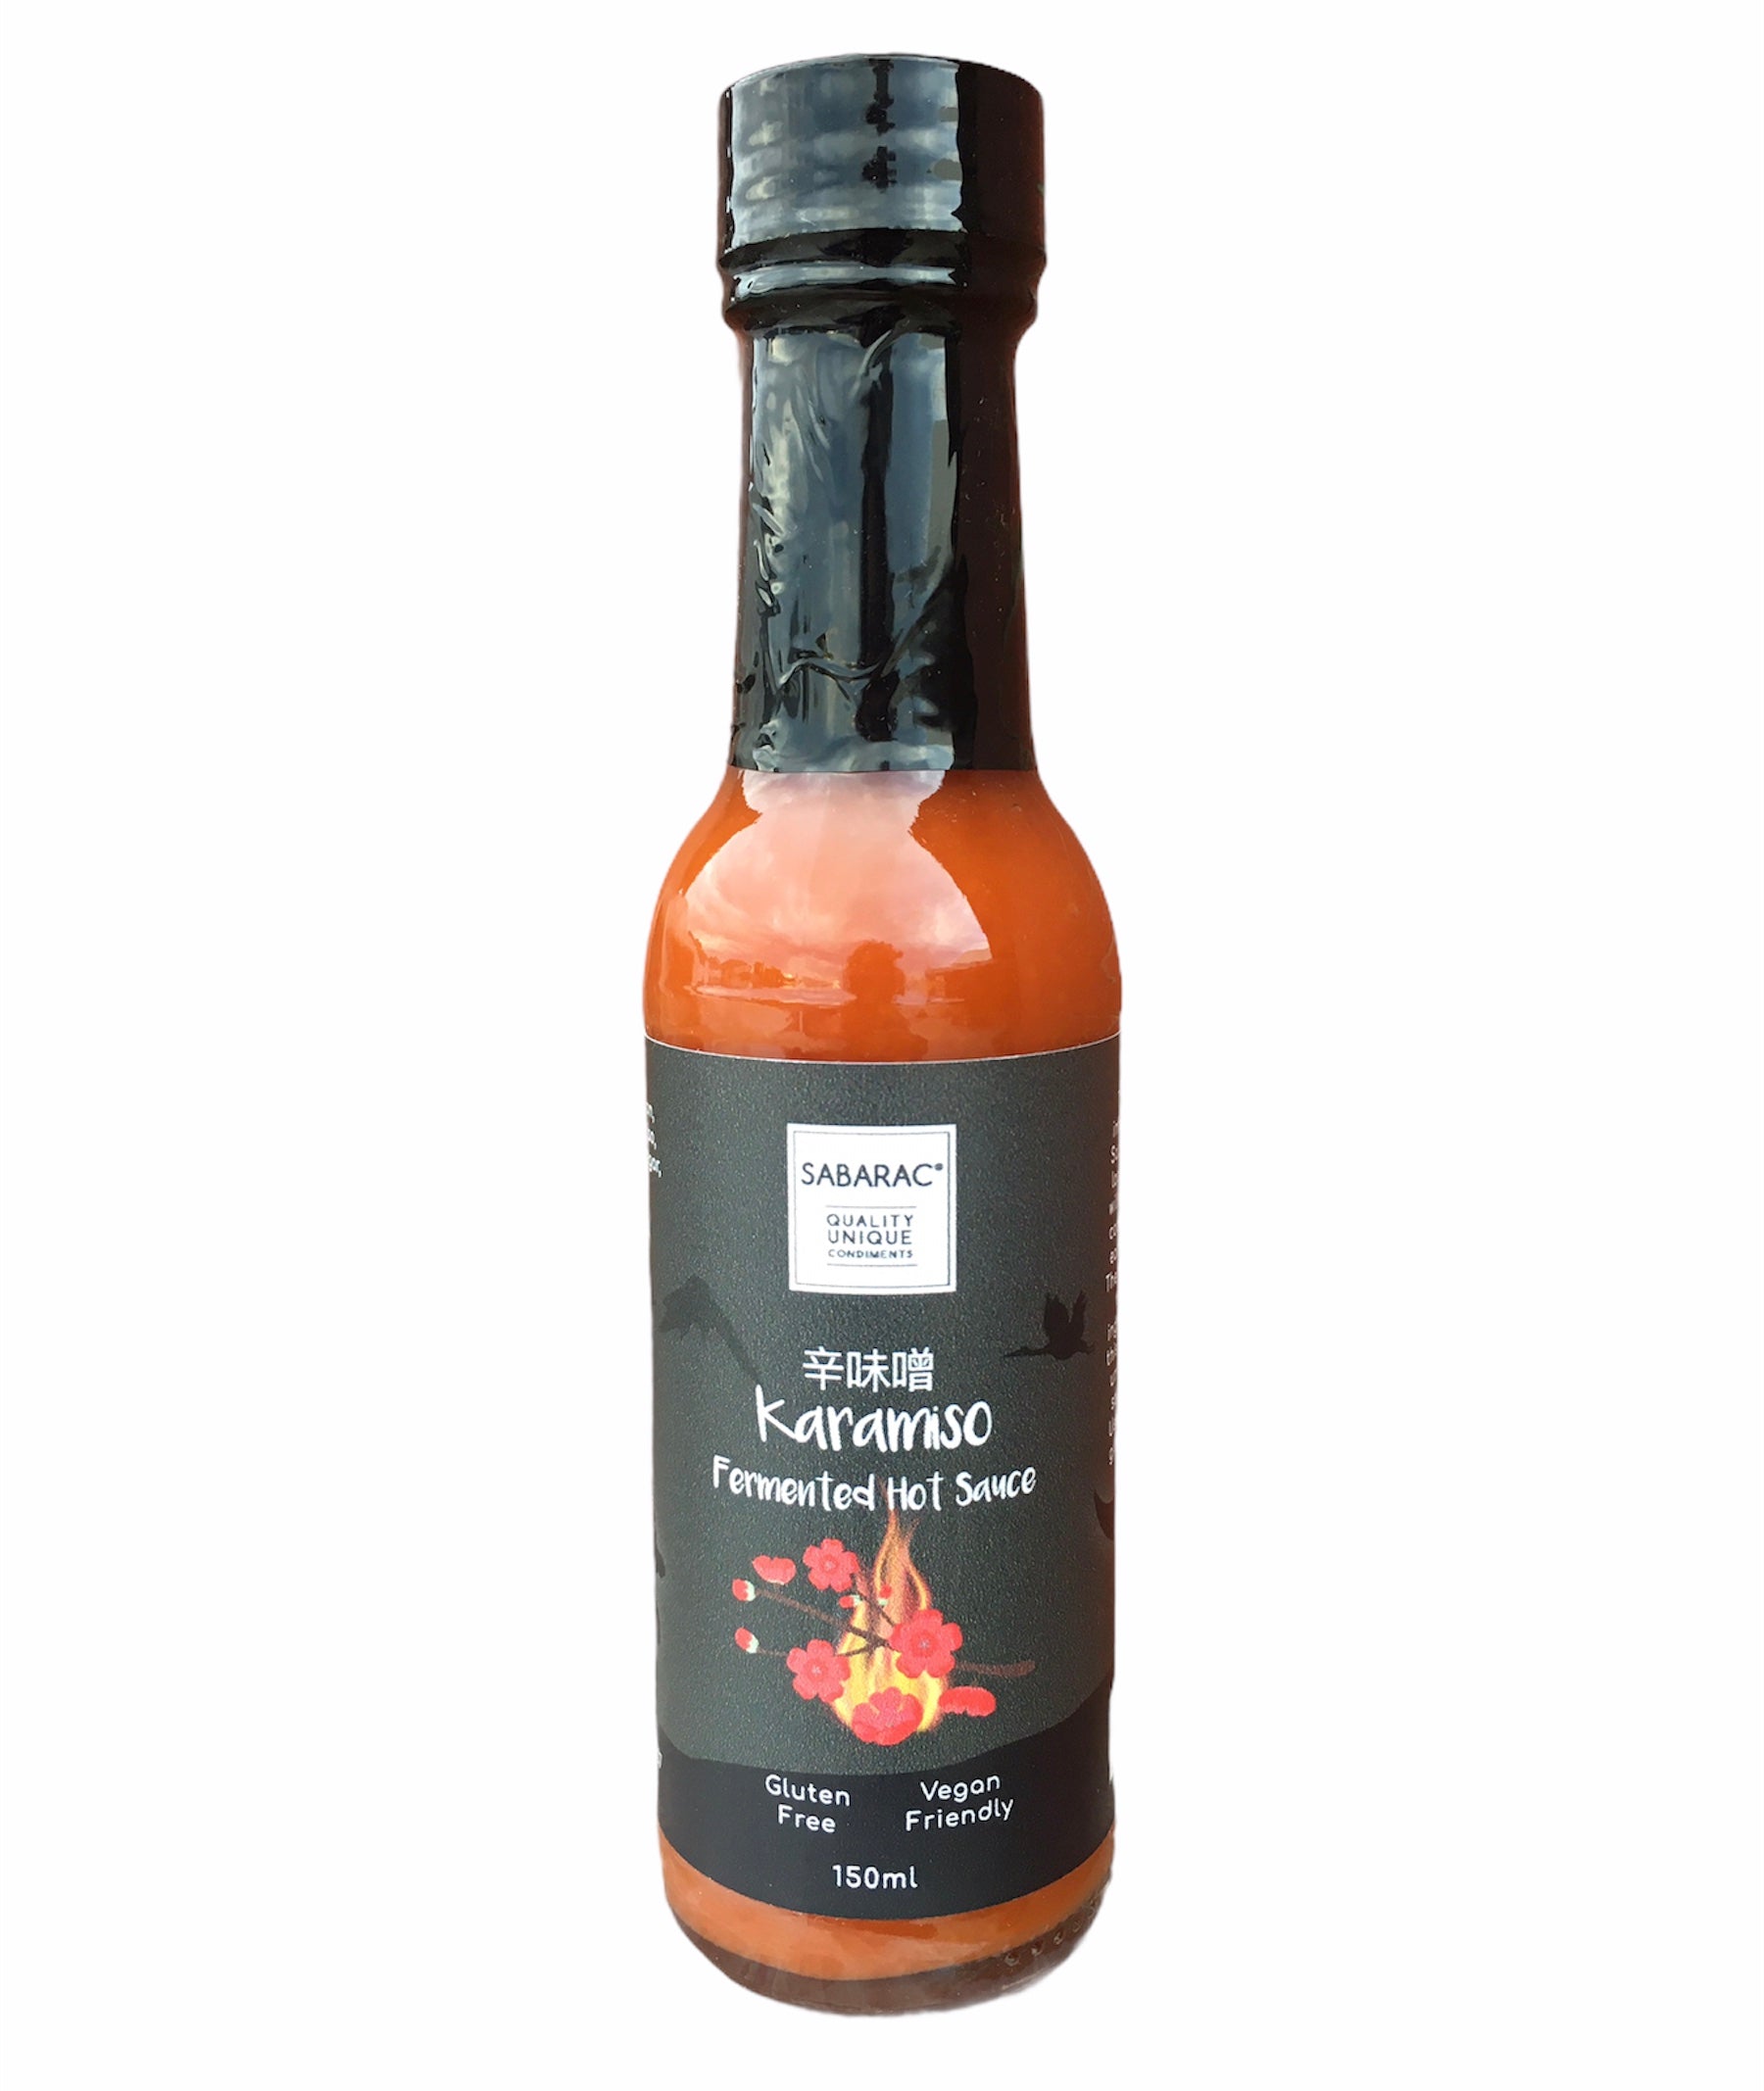 Sabarac Karamiso Fermented Hot Sauce 150ml